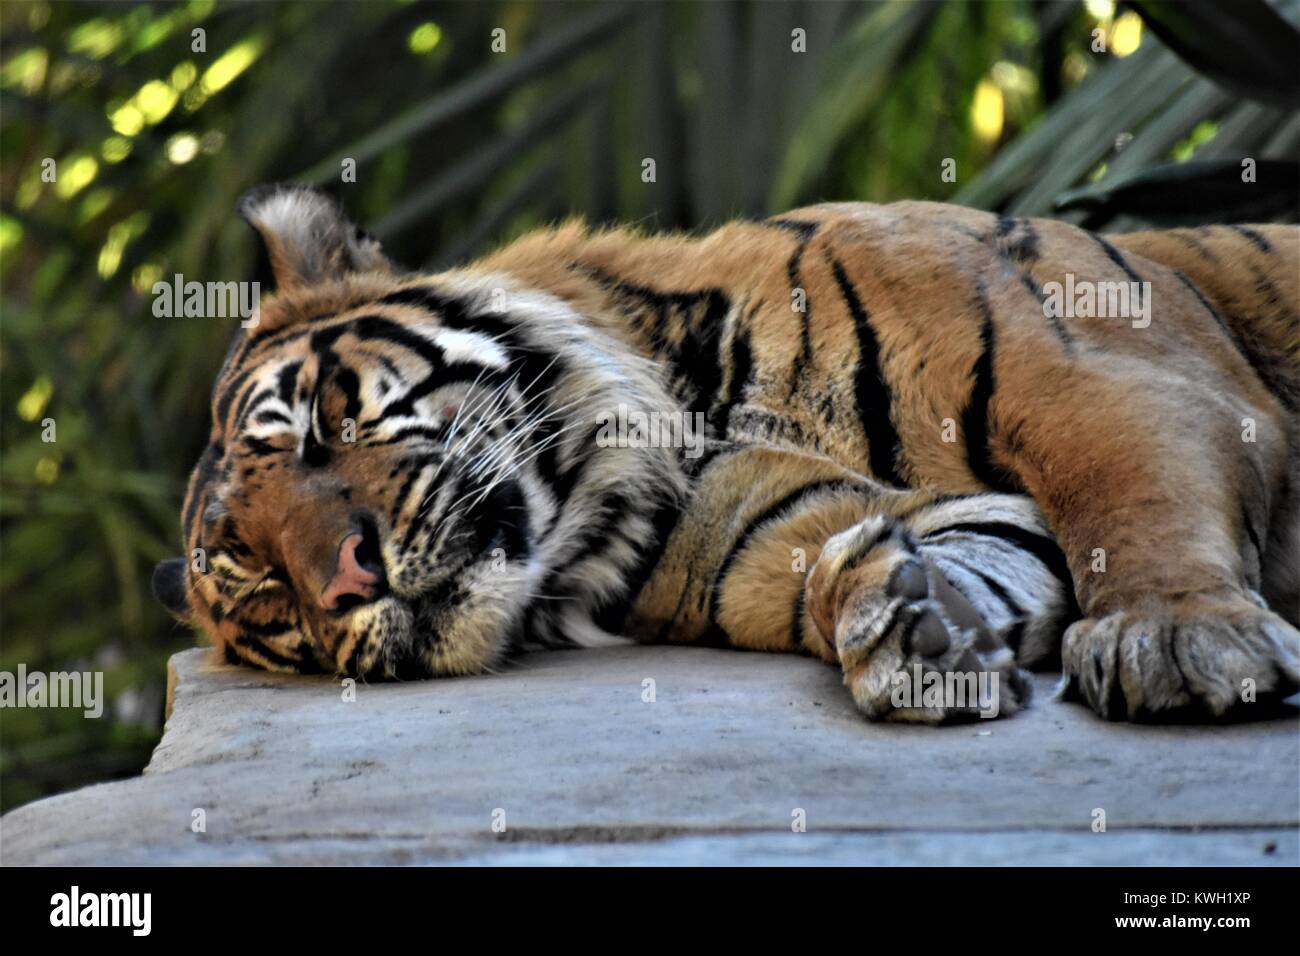 Giant Tiger Sleeping Stock Photo - Alamy